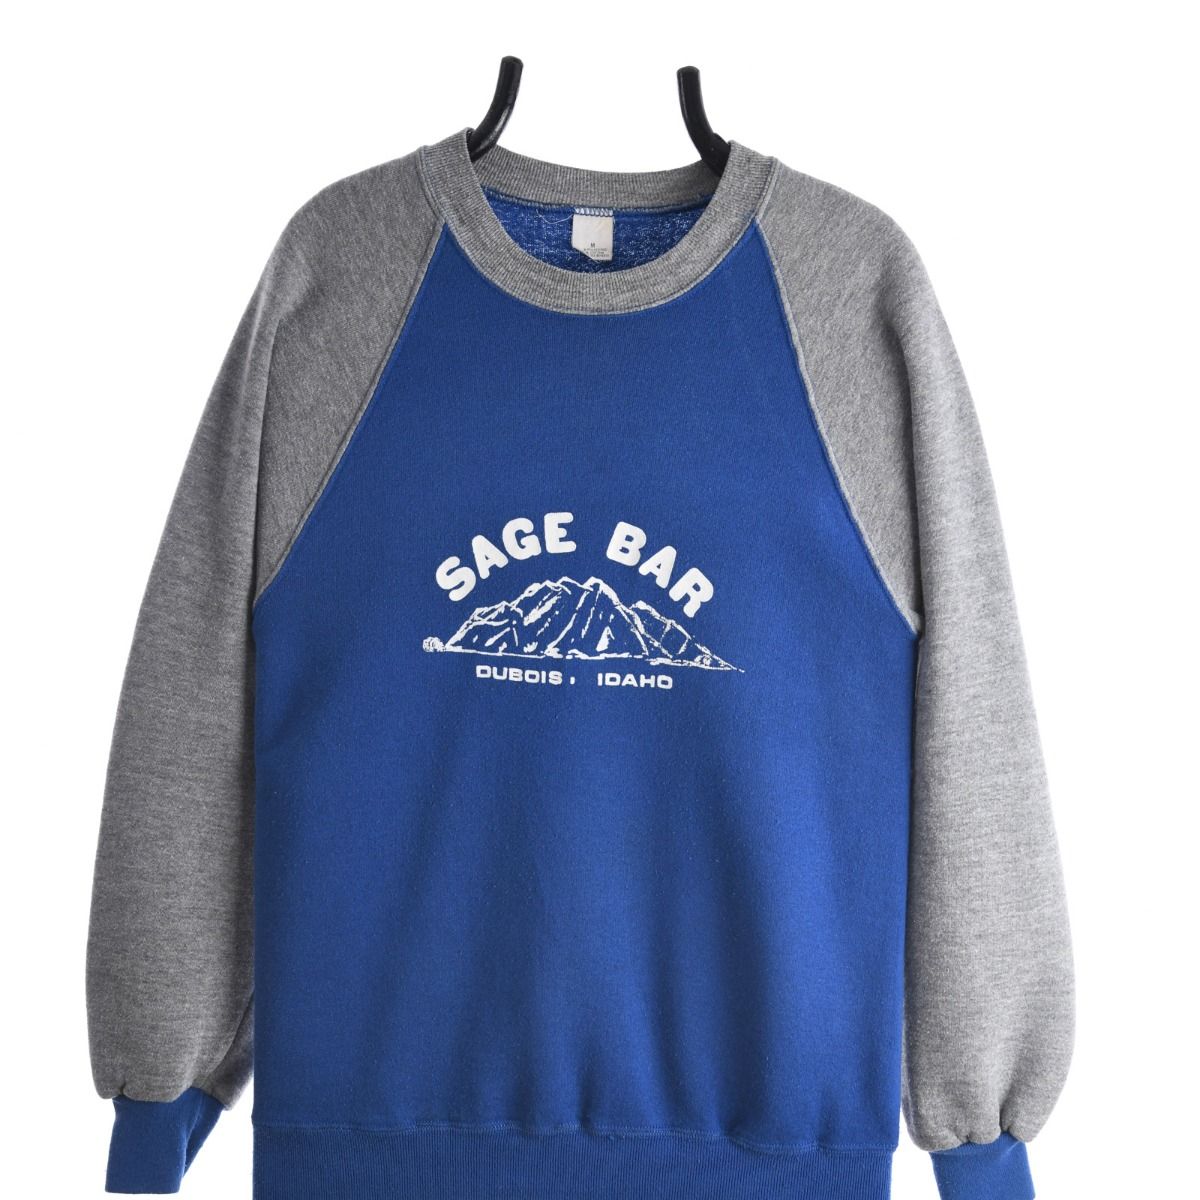 Vintage 1980s Sage Bar Sweatshirt